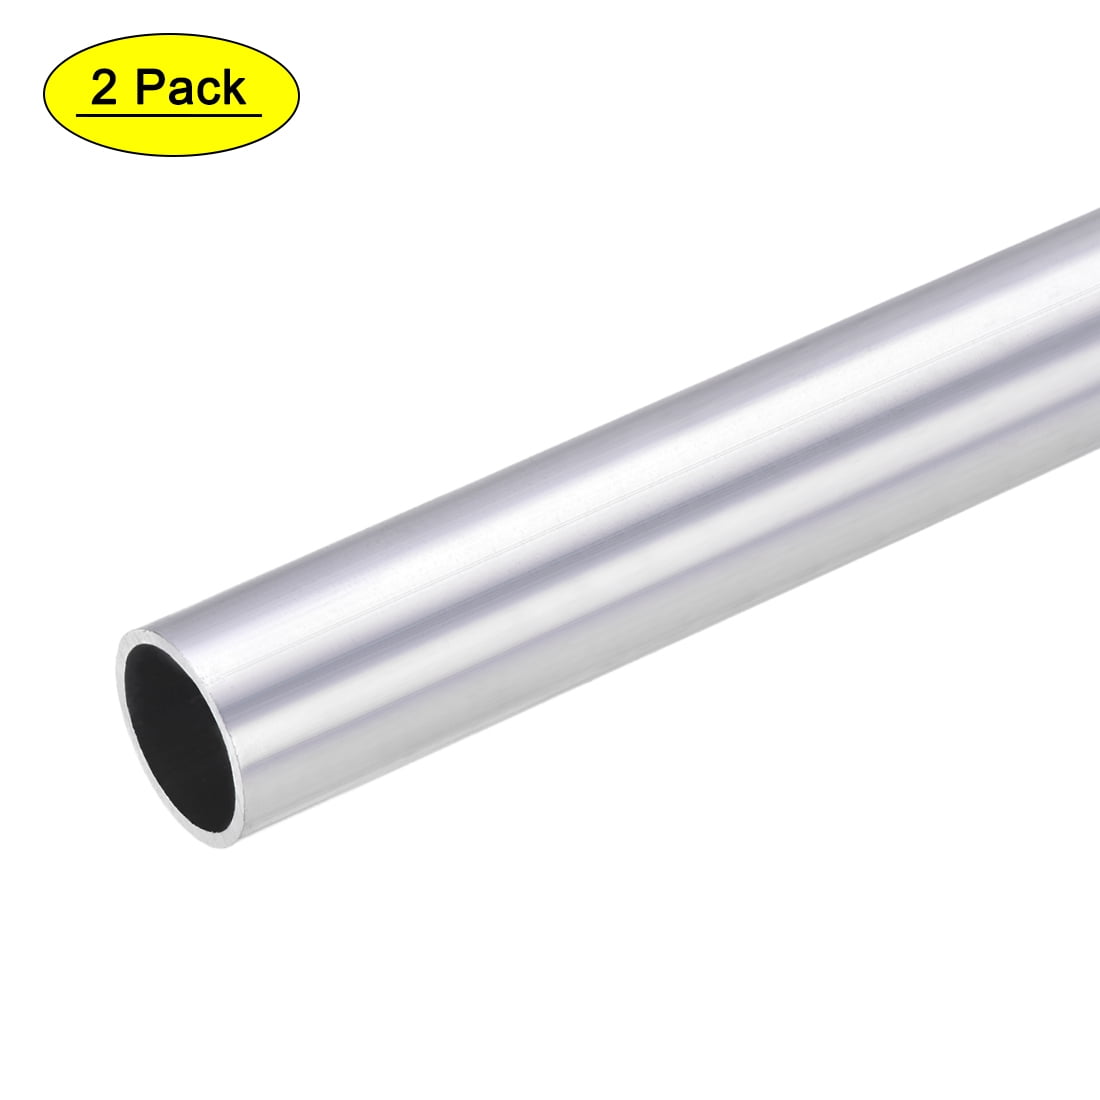 For Plastic-Copper-aluminum tubes Plastic Connector System 22 mm 